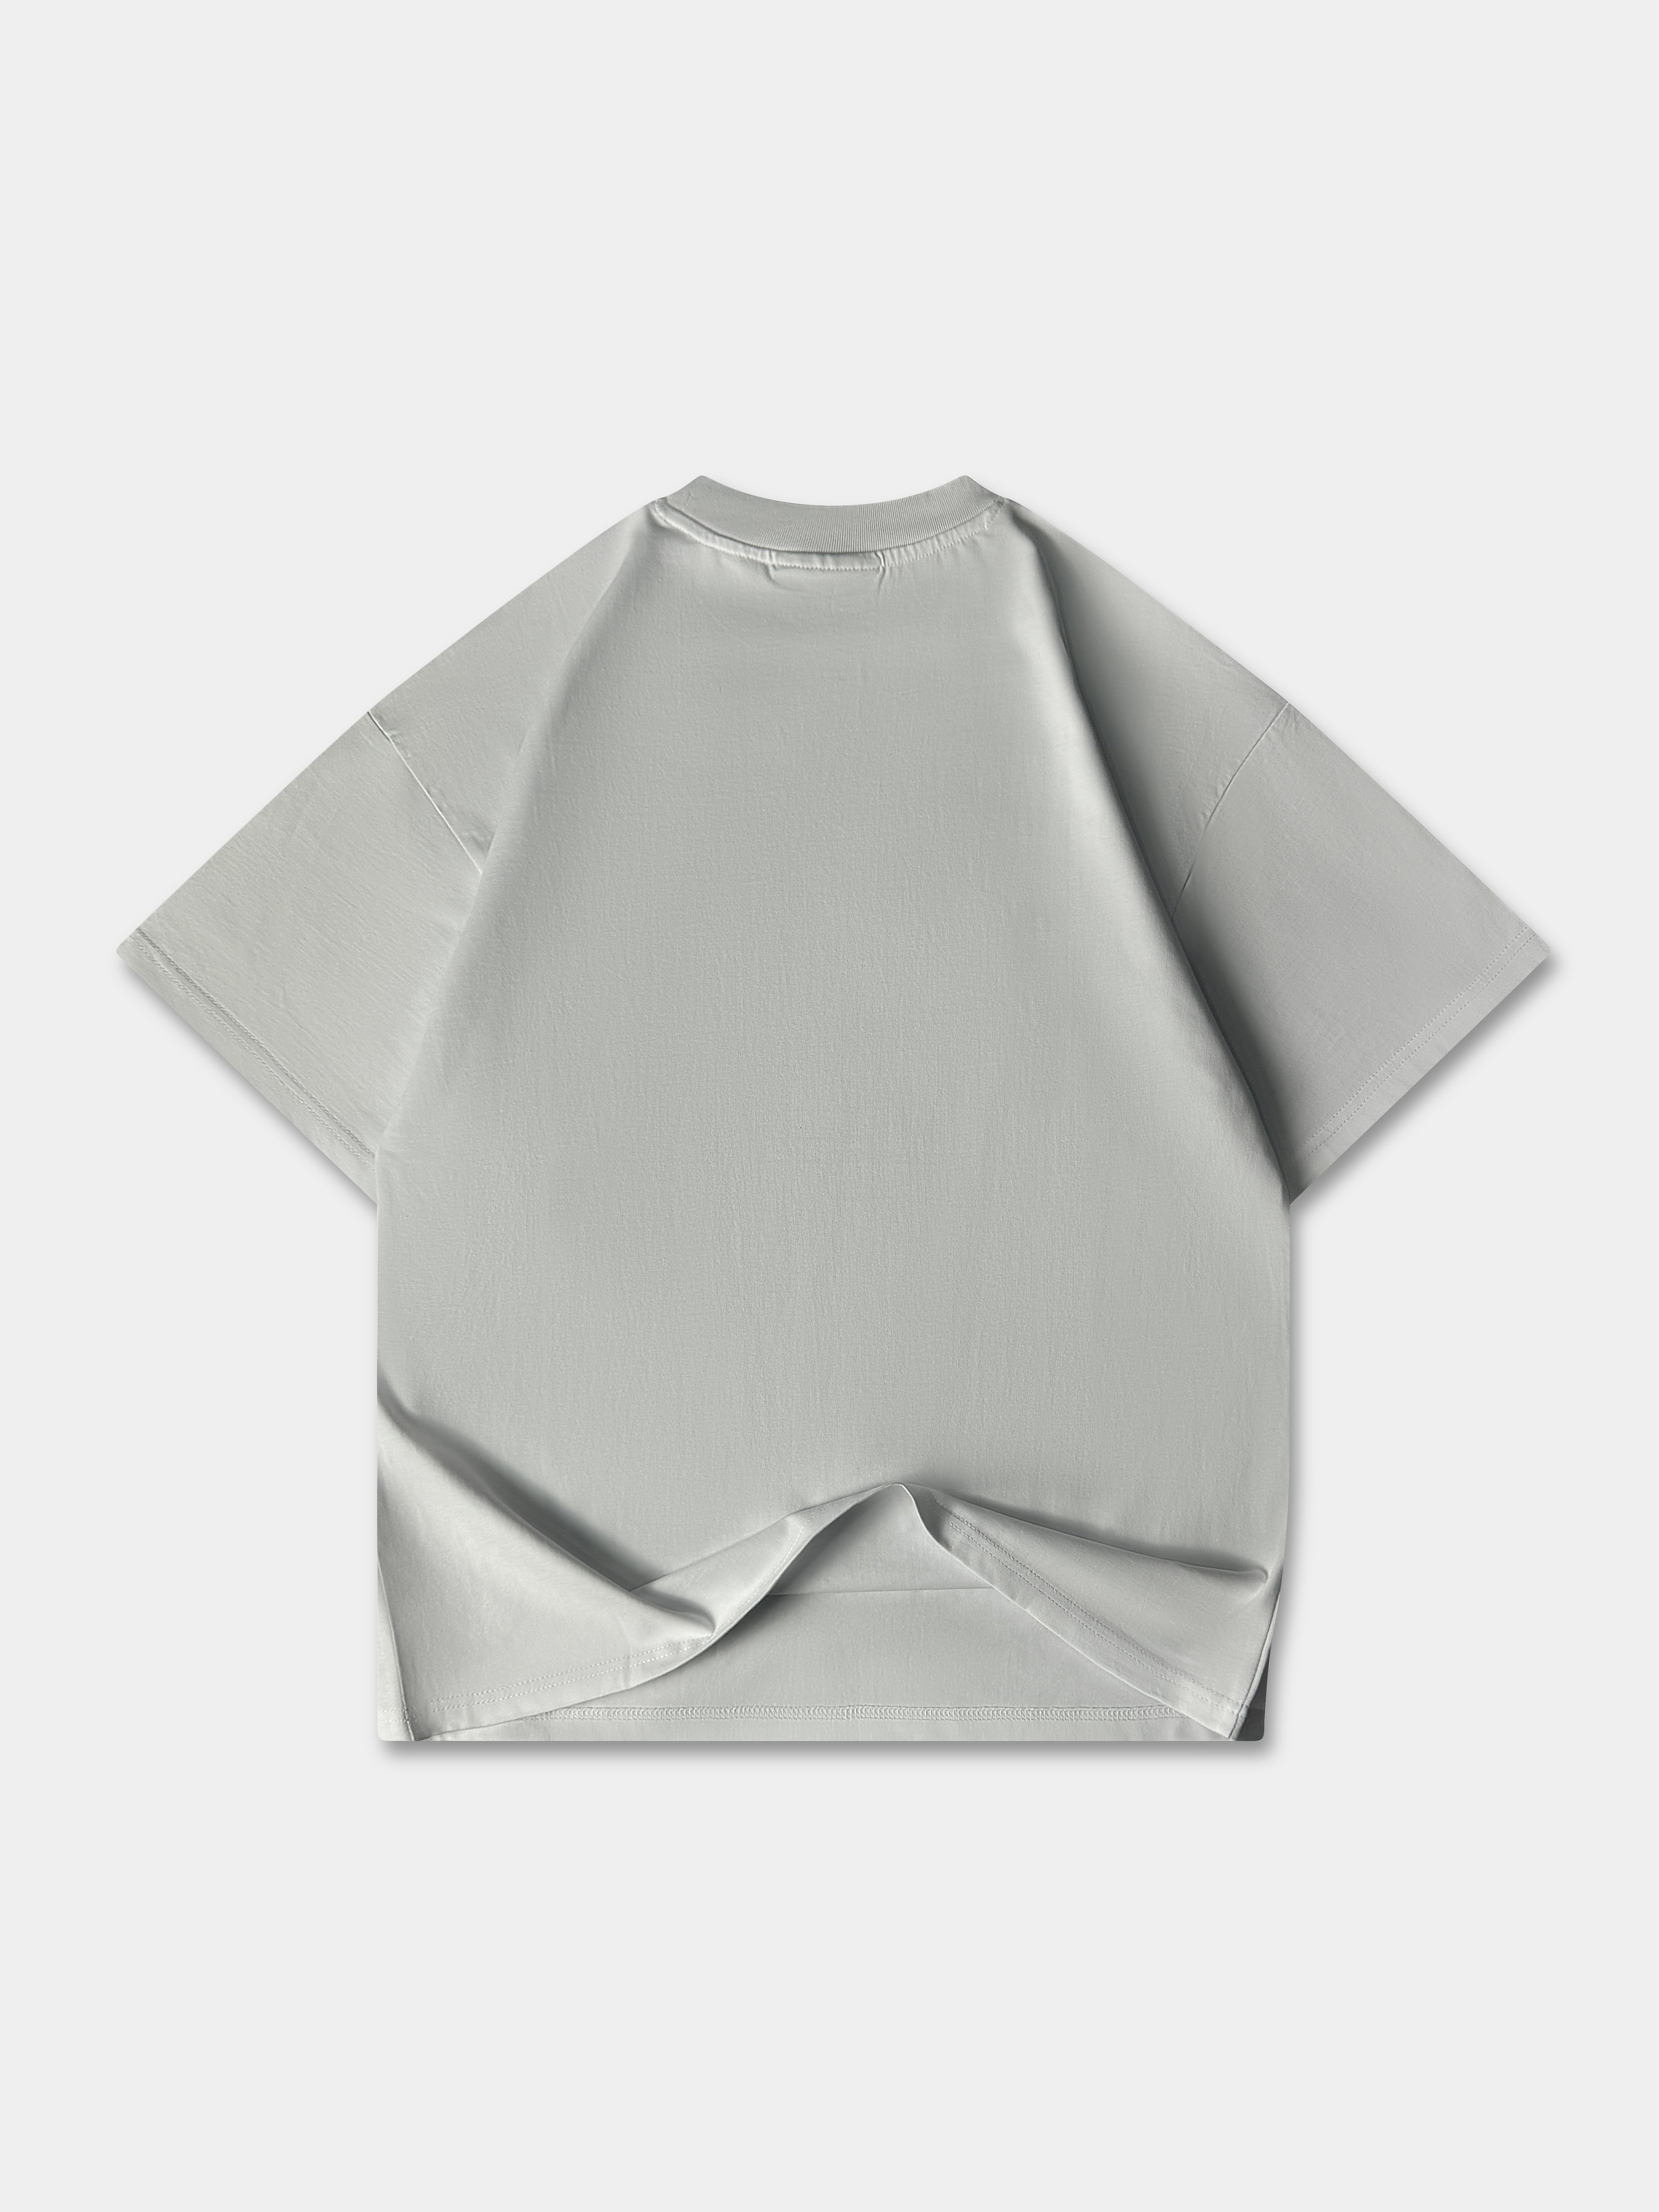 Vibn Luxury Heavyweight Blank T-Shirt - White